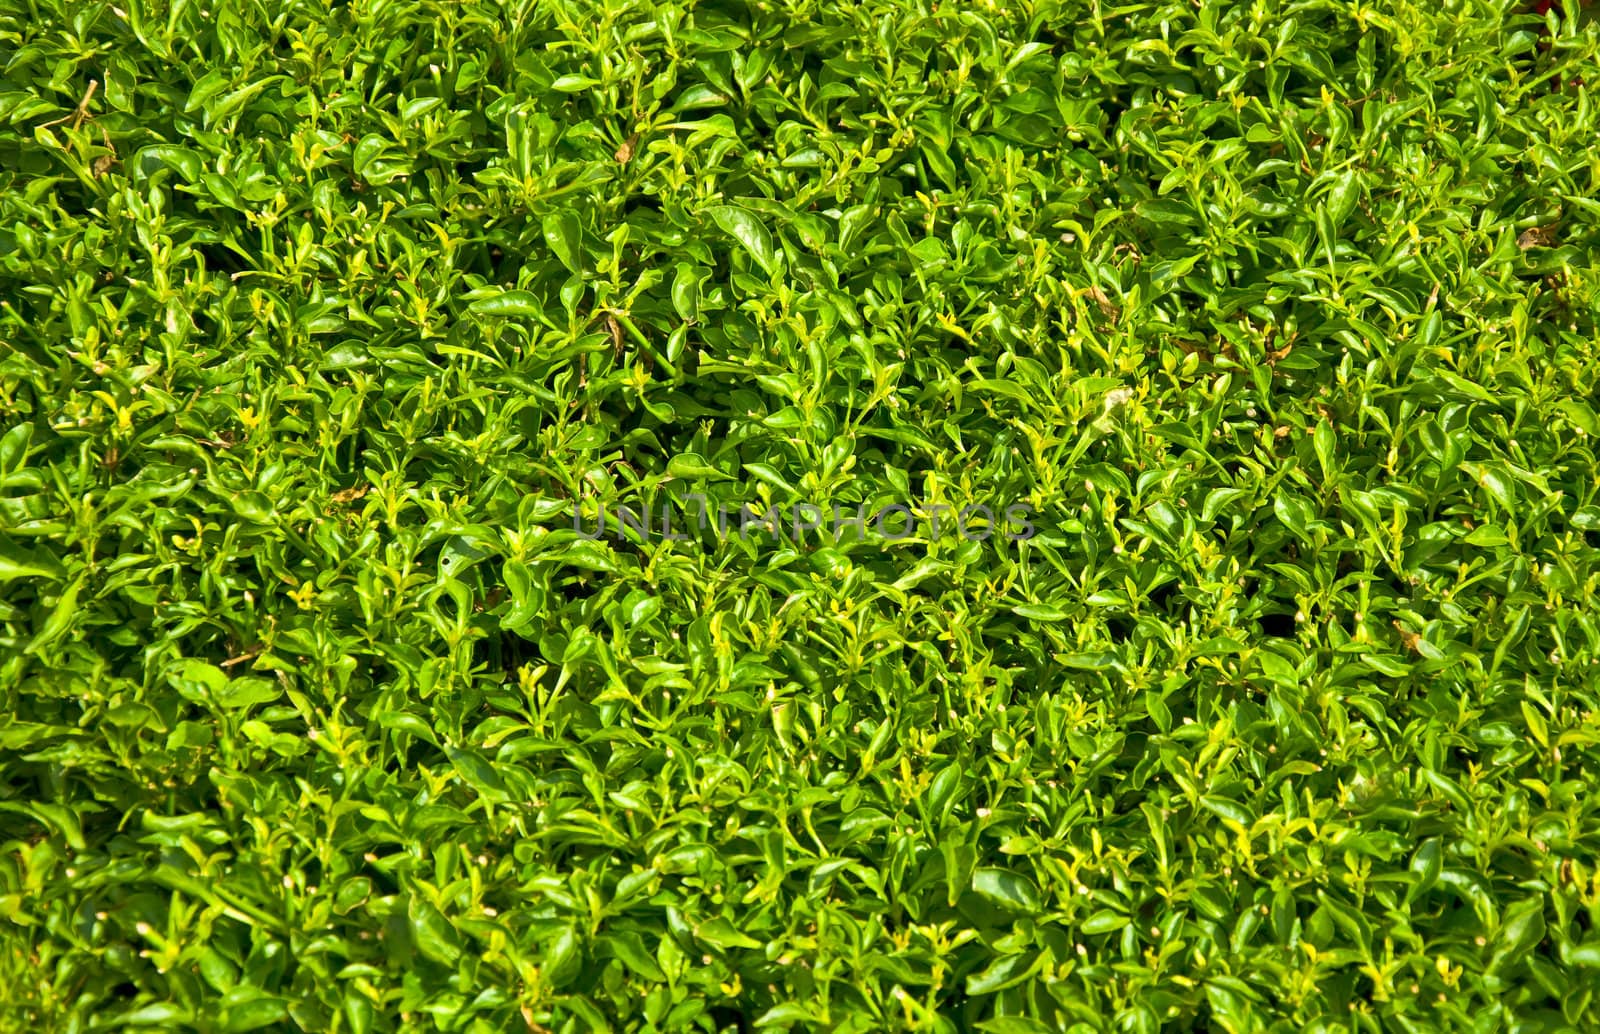 Texture of green grass closeup. Focus on the first stalks. Blur. Low depth of field.